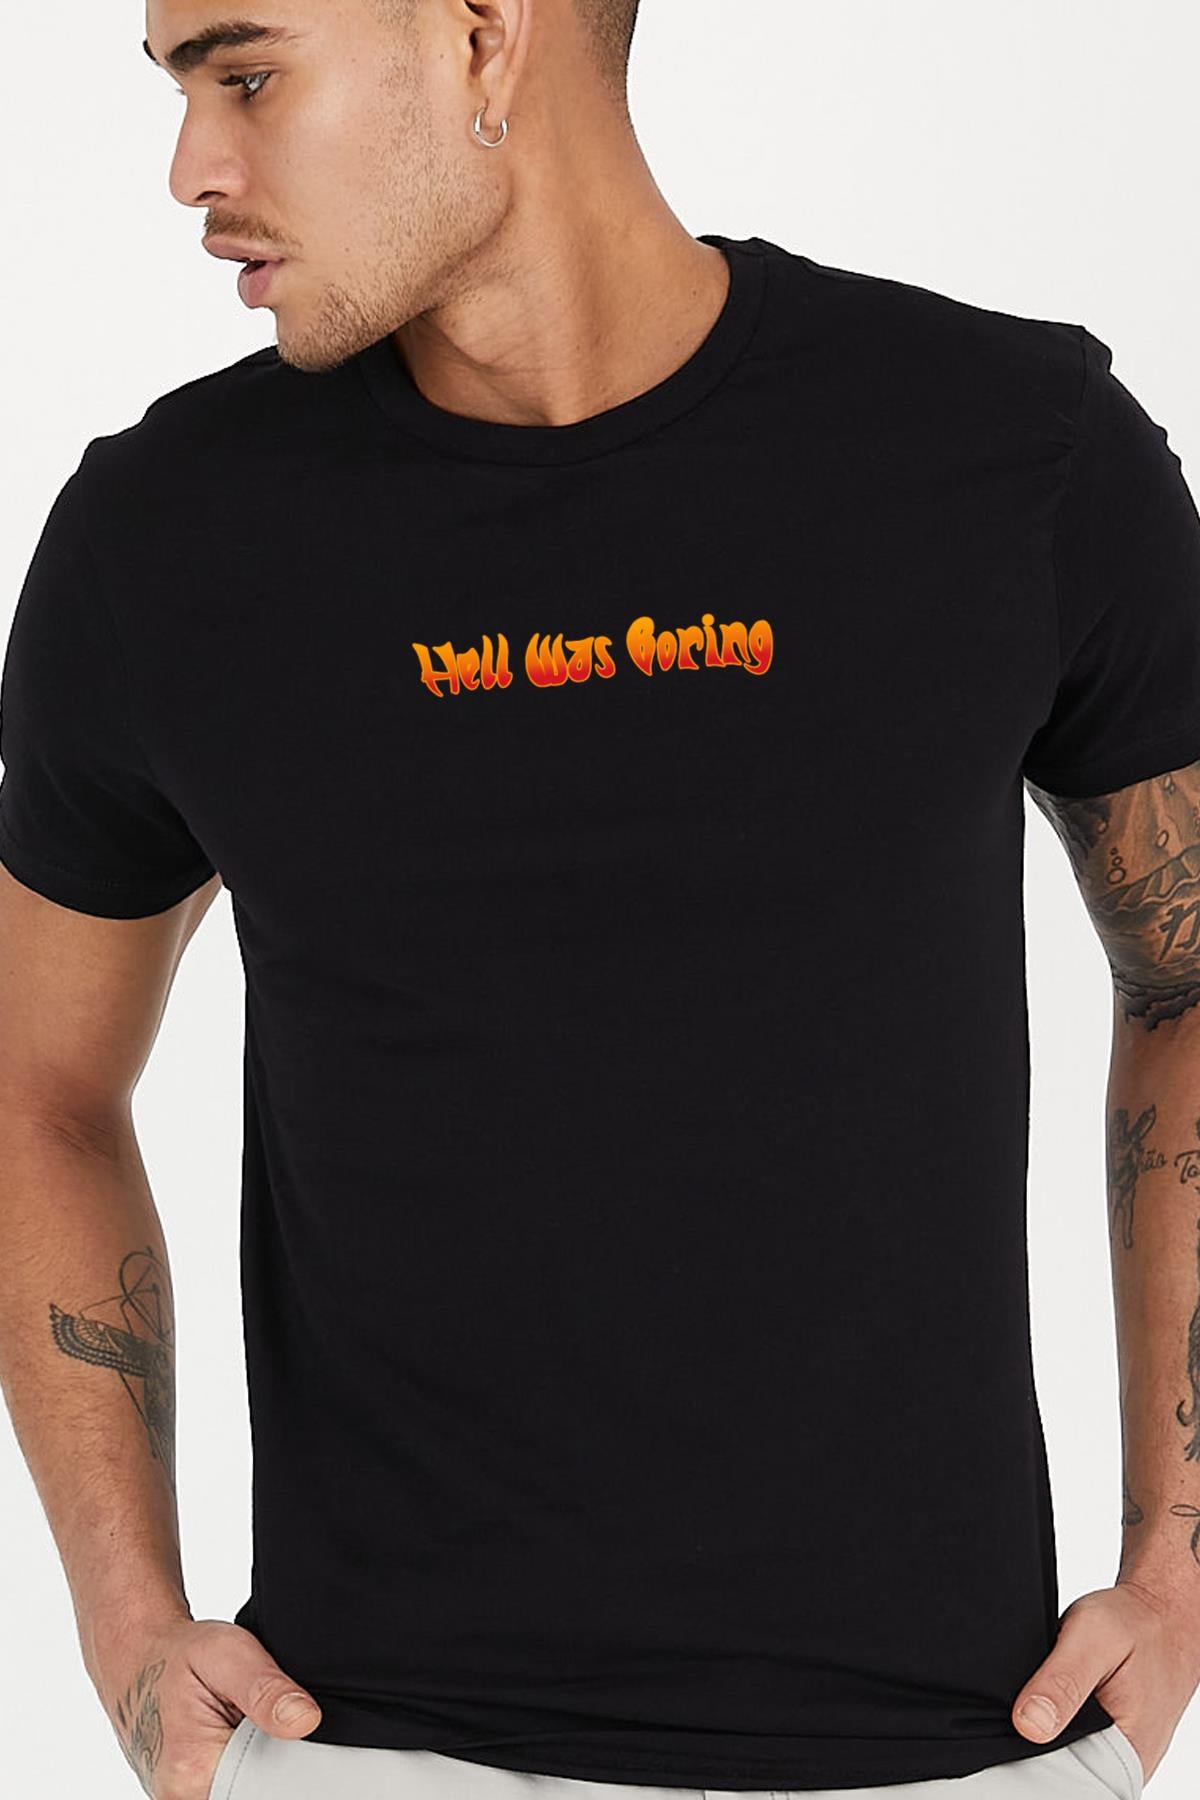 Hell Was Boraing Slogan Printed Crew Neck Men's T -shirt